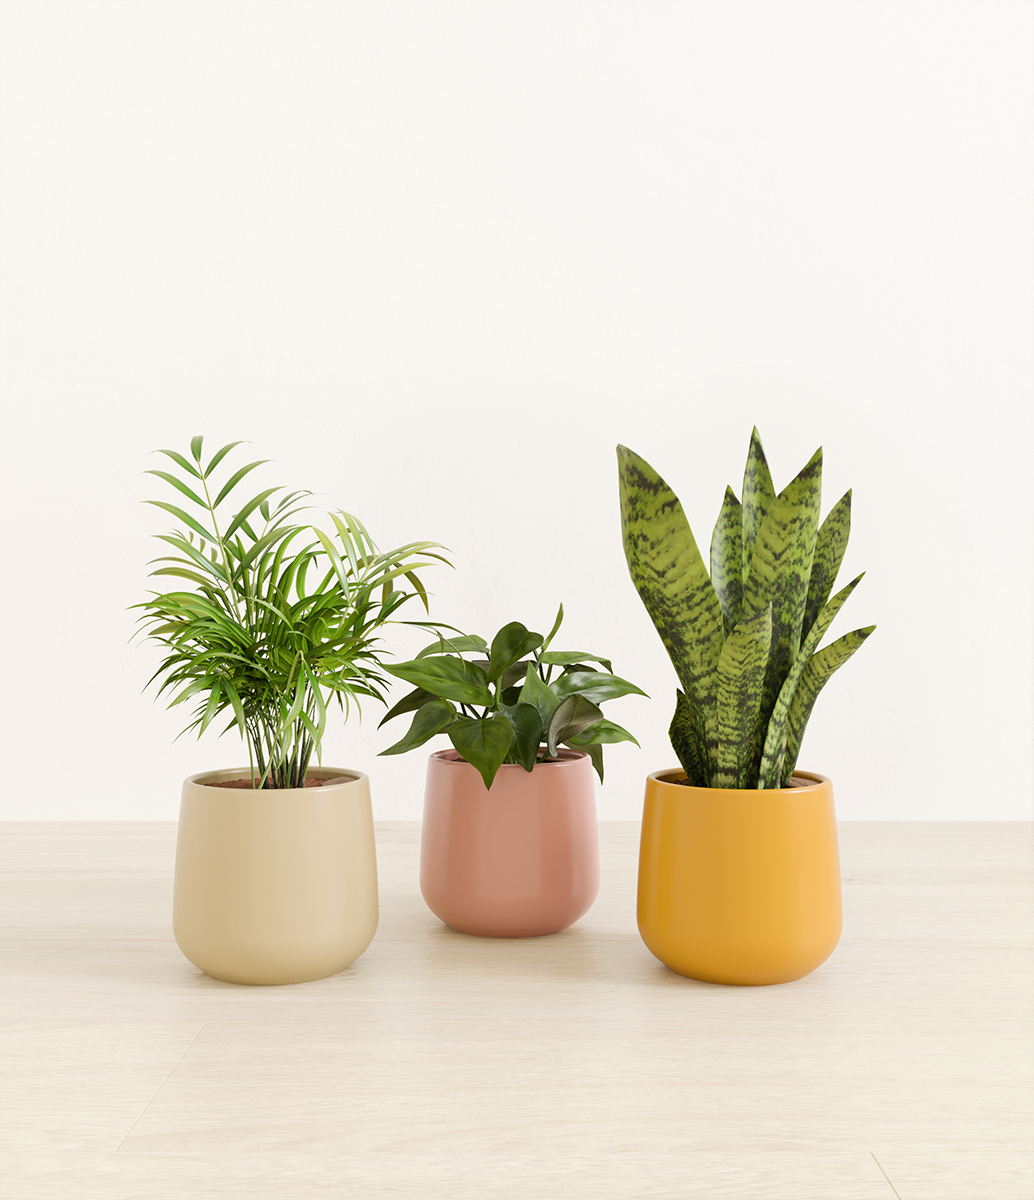 3 Plants in Different Pots 3D Rendering